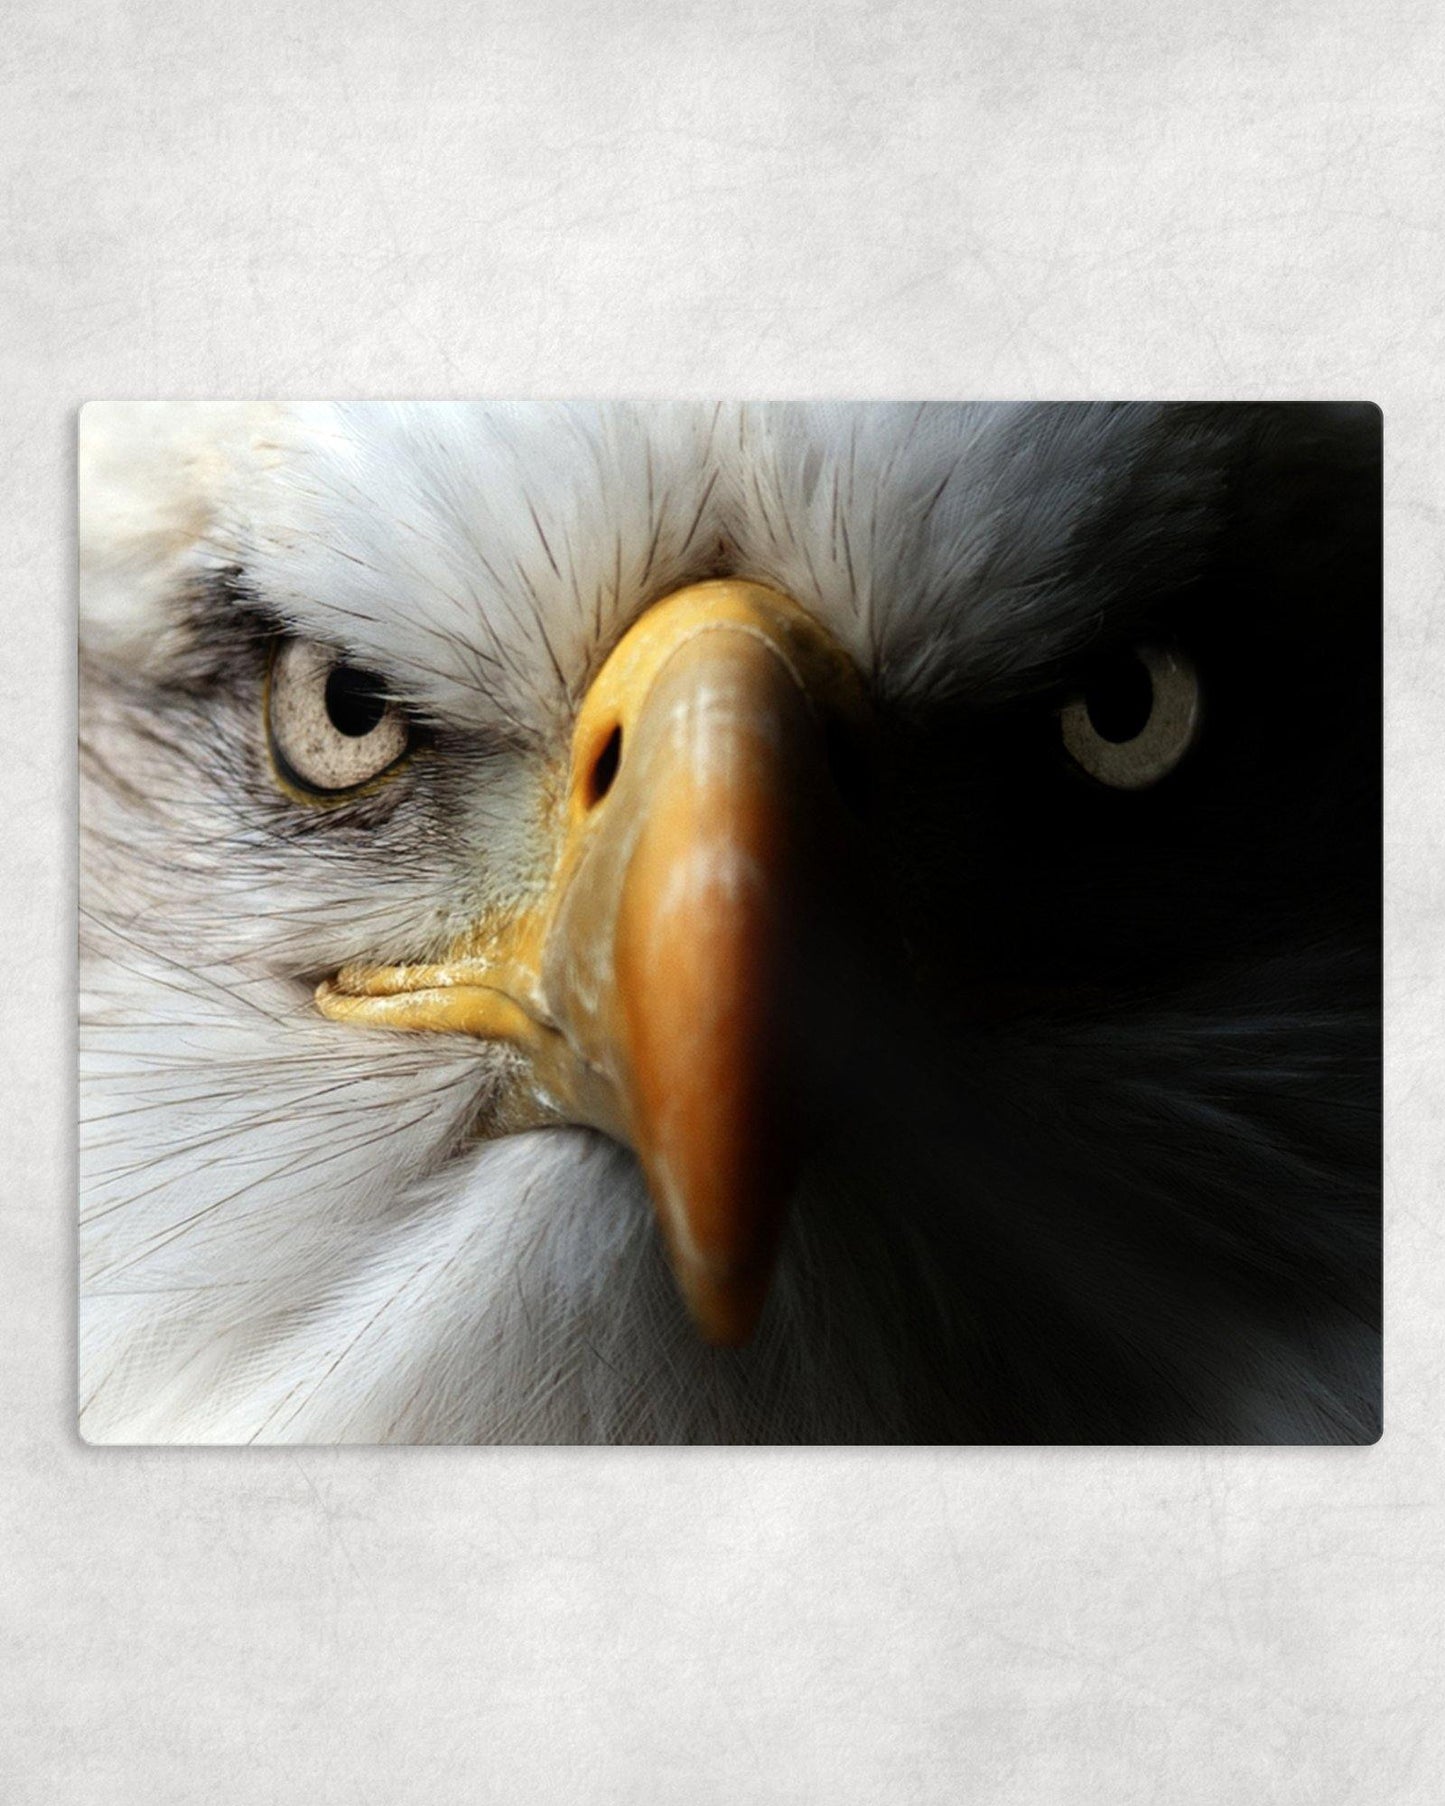 American Bald Eagle Face Metal Photo Panel - 8x10 - Schoppix Gifts